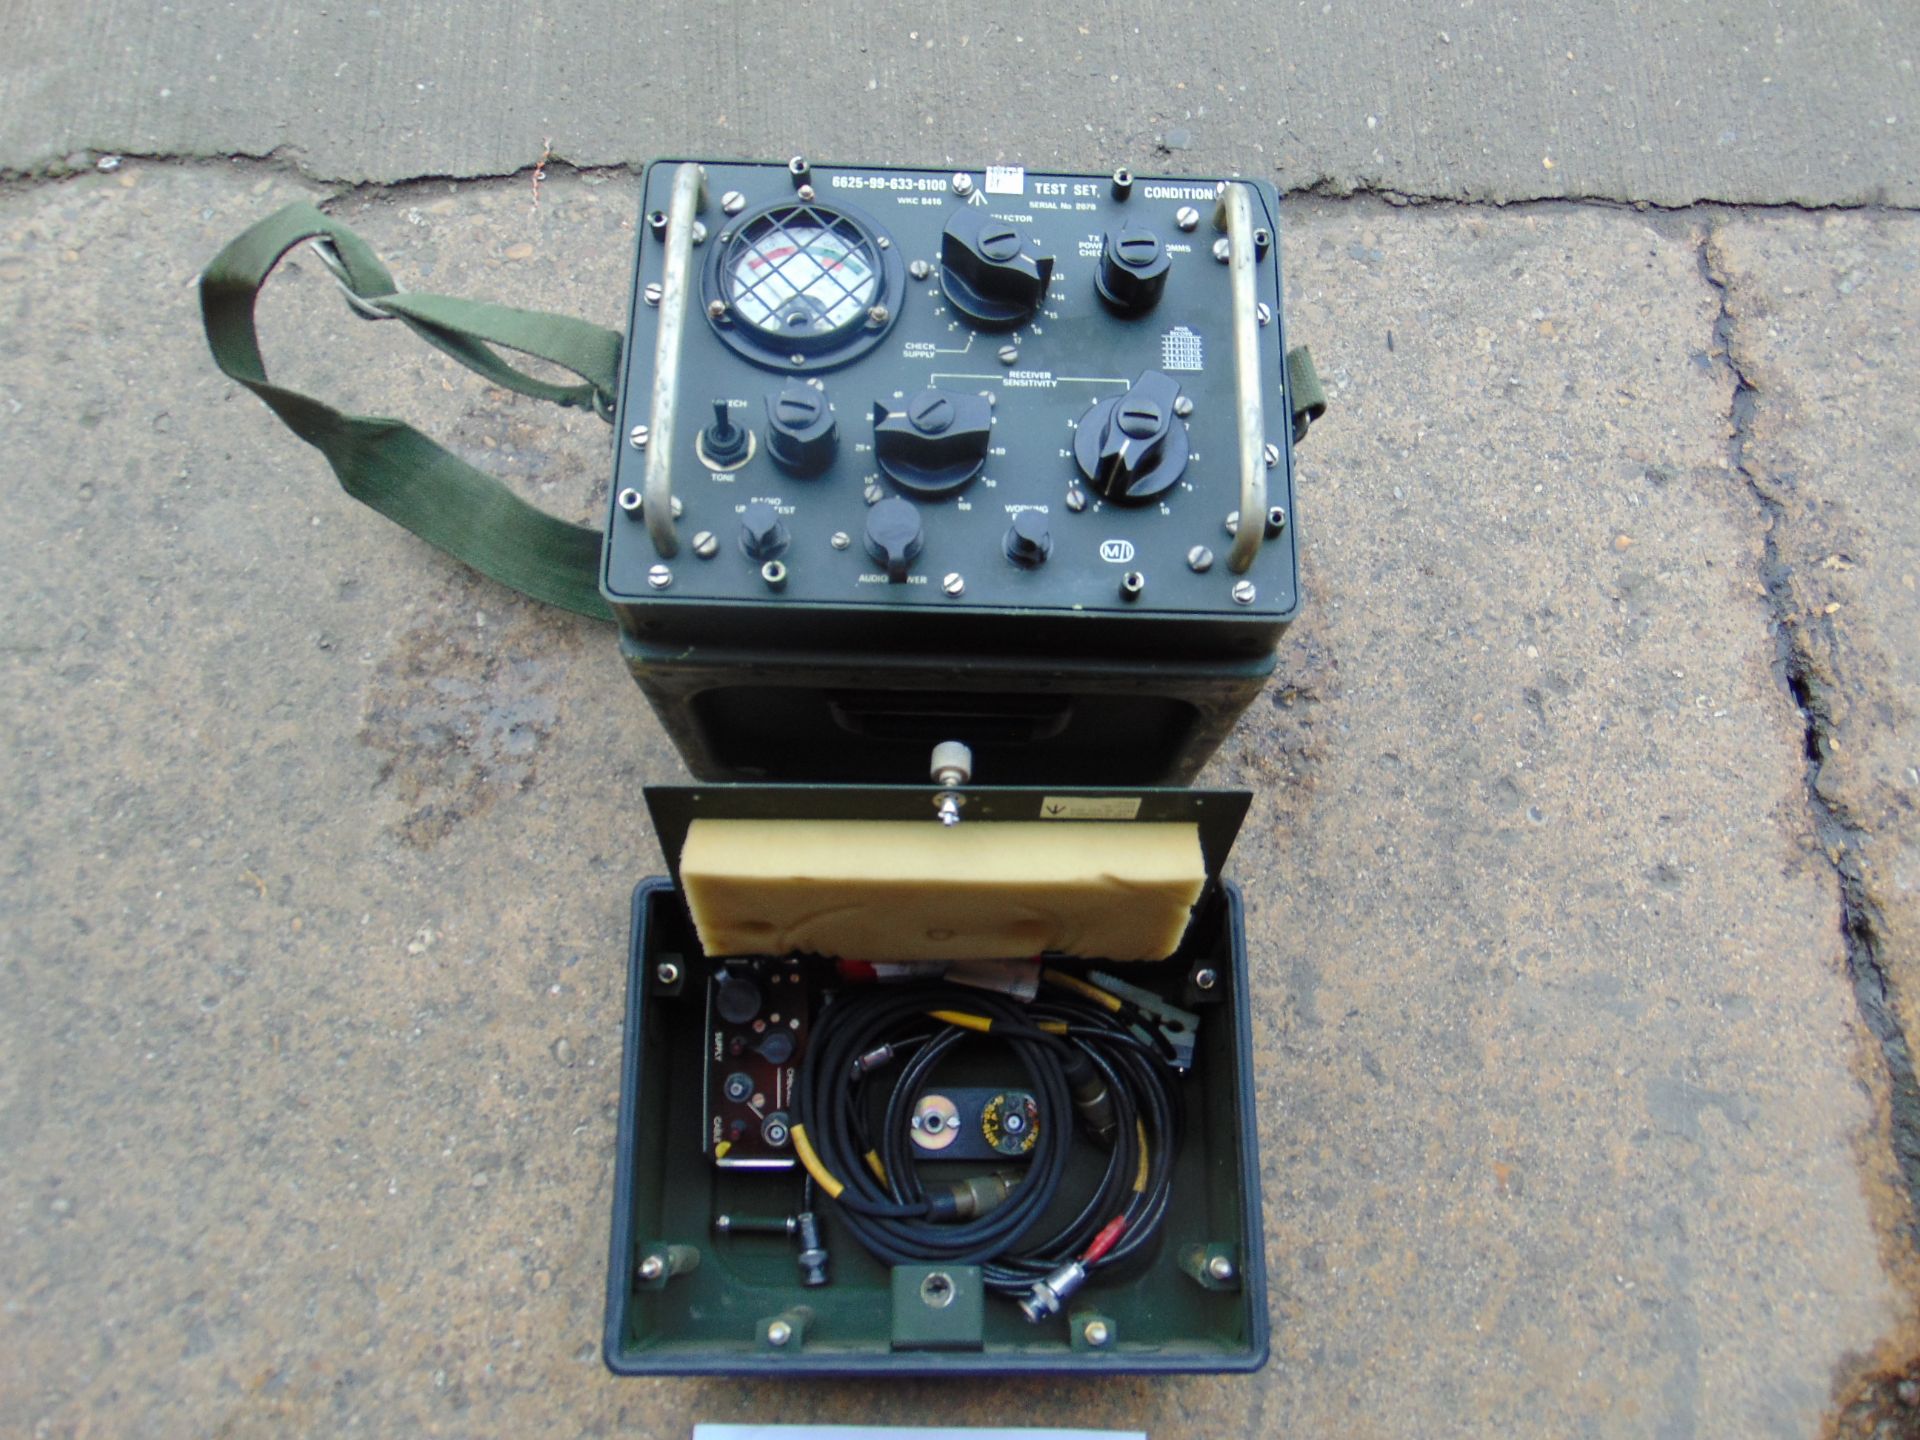 Test Set Clansman Radios c/w Accessories - Image 2 of 5